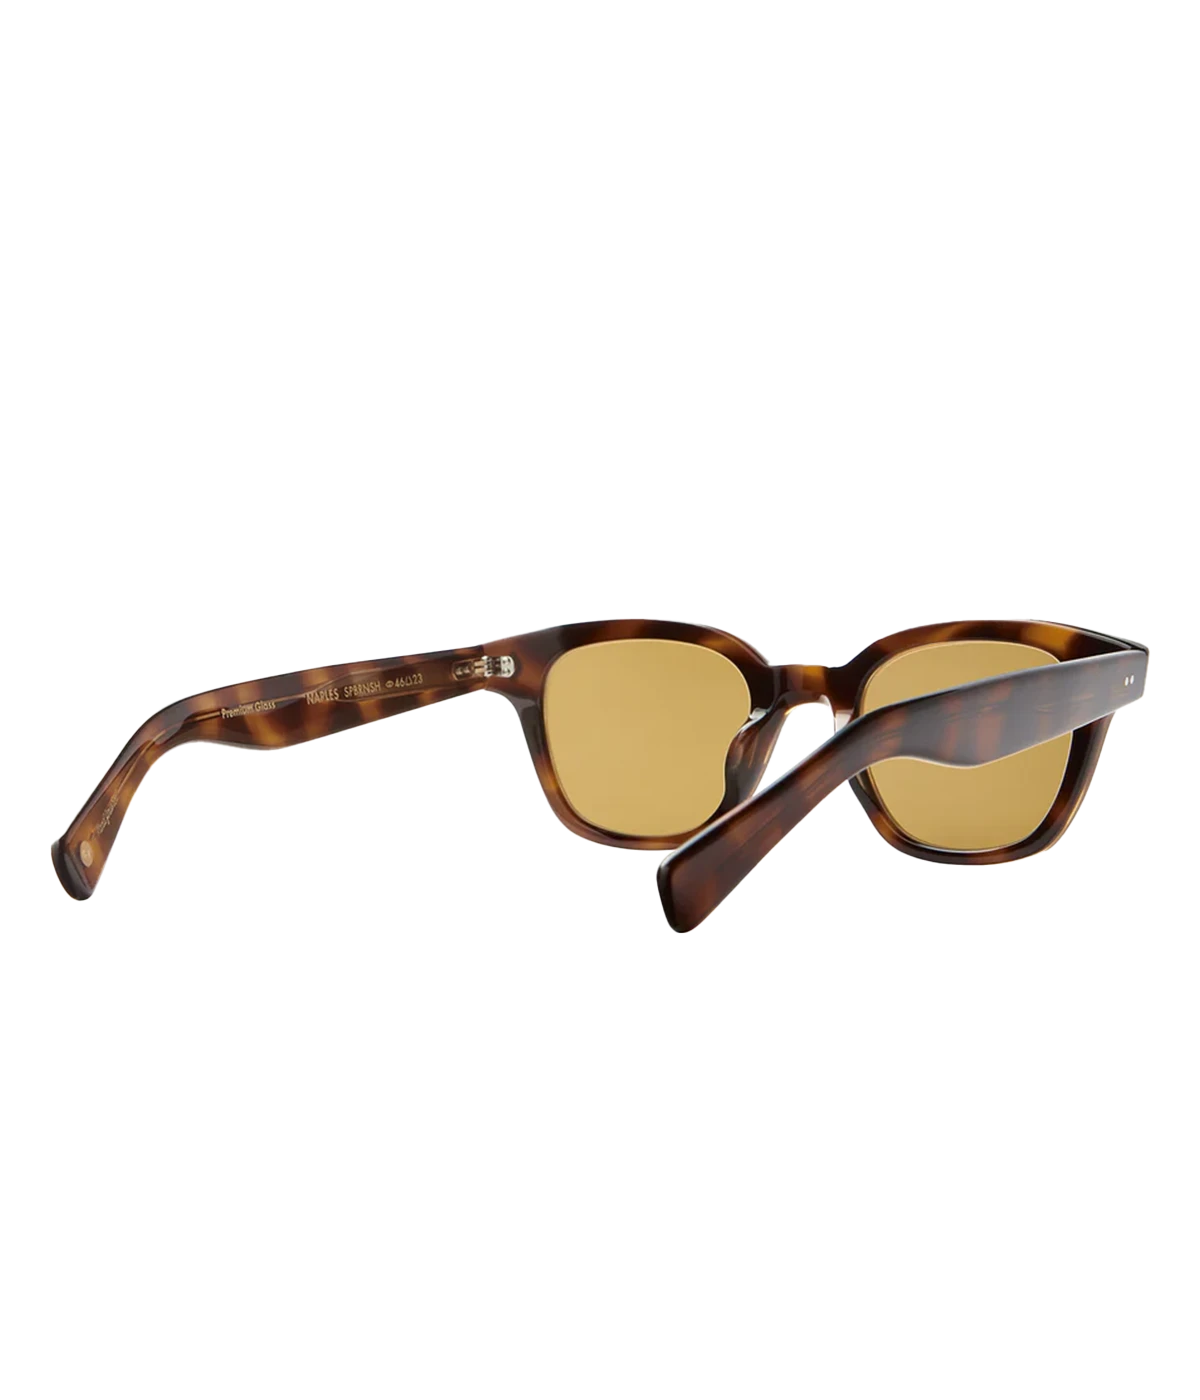 Naples Sun 46 Sunglasses in Tortoise & Pure Maple